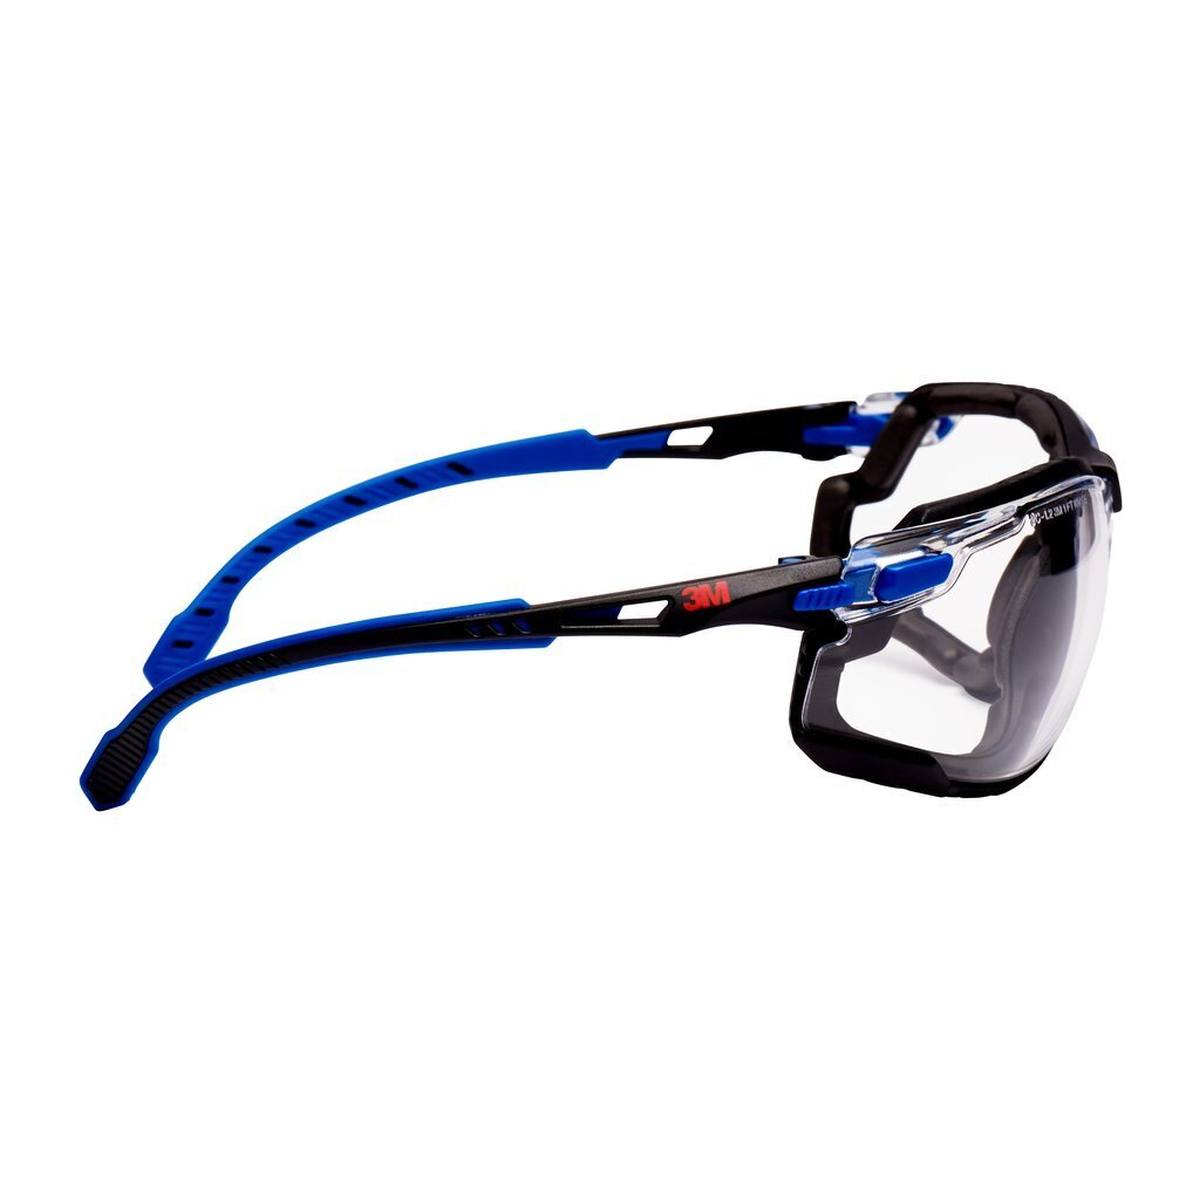 3M Solus 1000 safety spectacles, blue/black temples, Scotchgard anti-fog/anti-scratch coating (K&amp;N), clear lens, foam frame and headband, S1101SGAFKT-EU